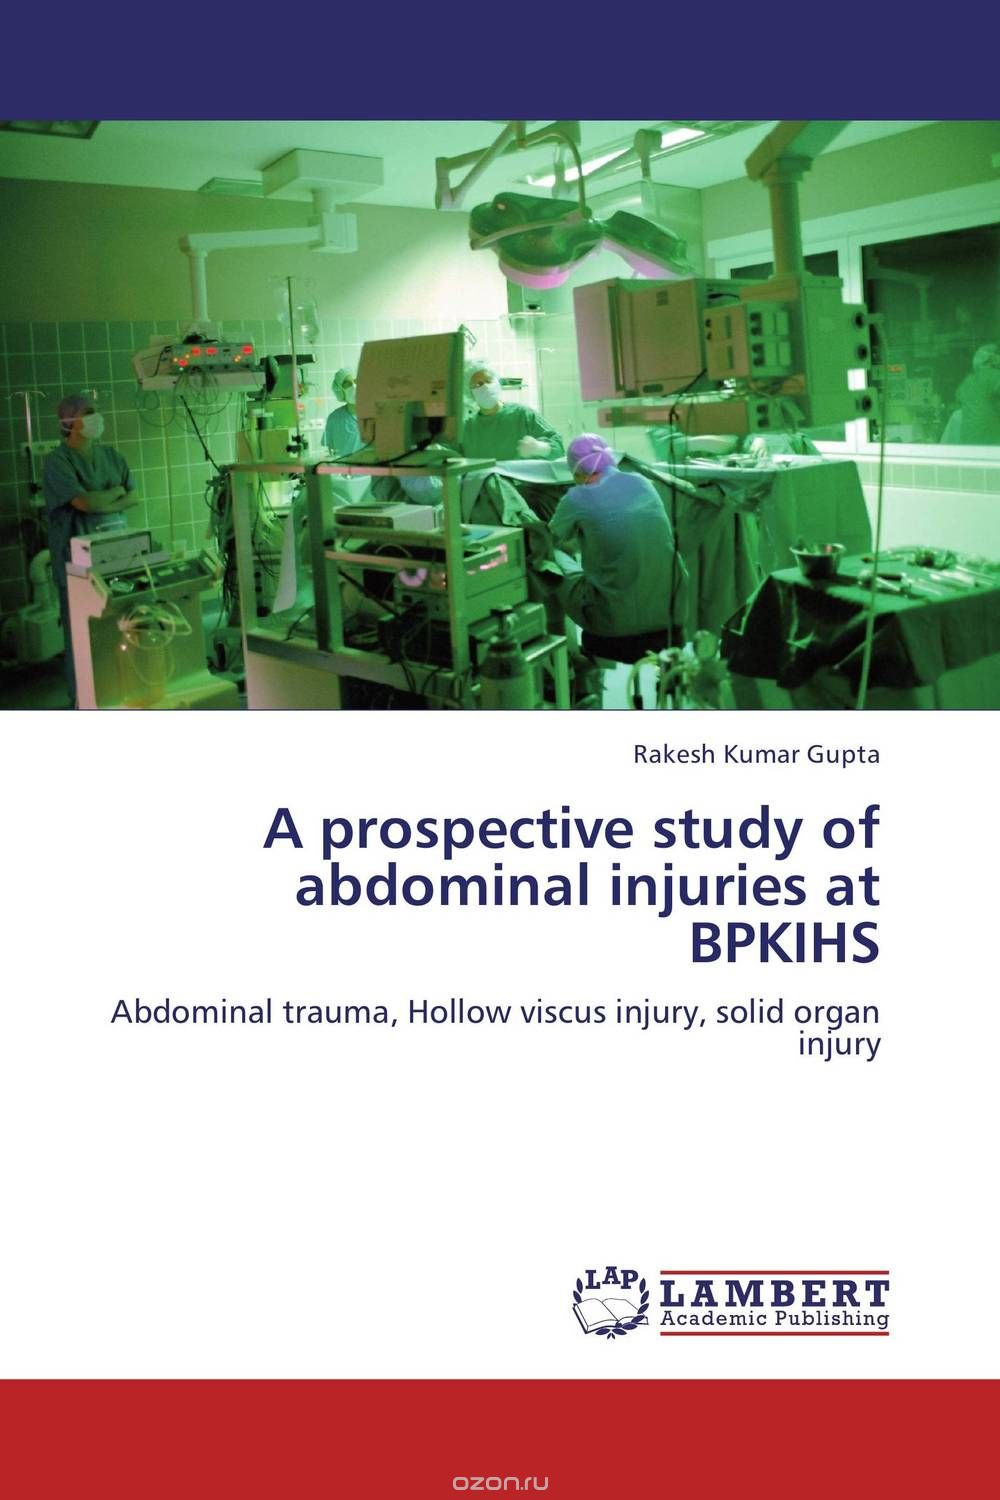 Скачать книгу "A prospective study of abdominal injuries at BPKIHS"